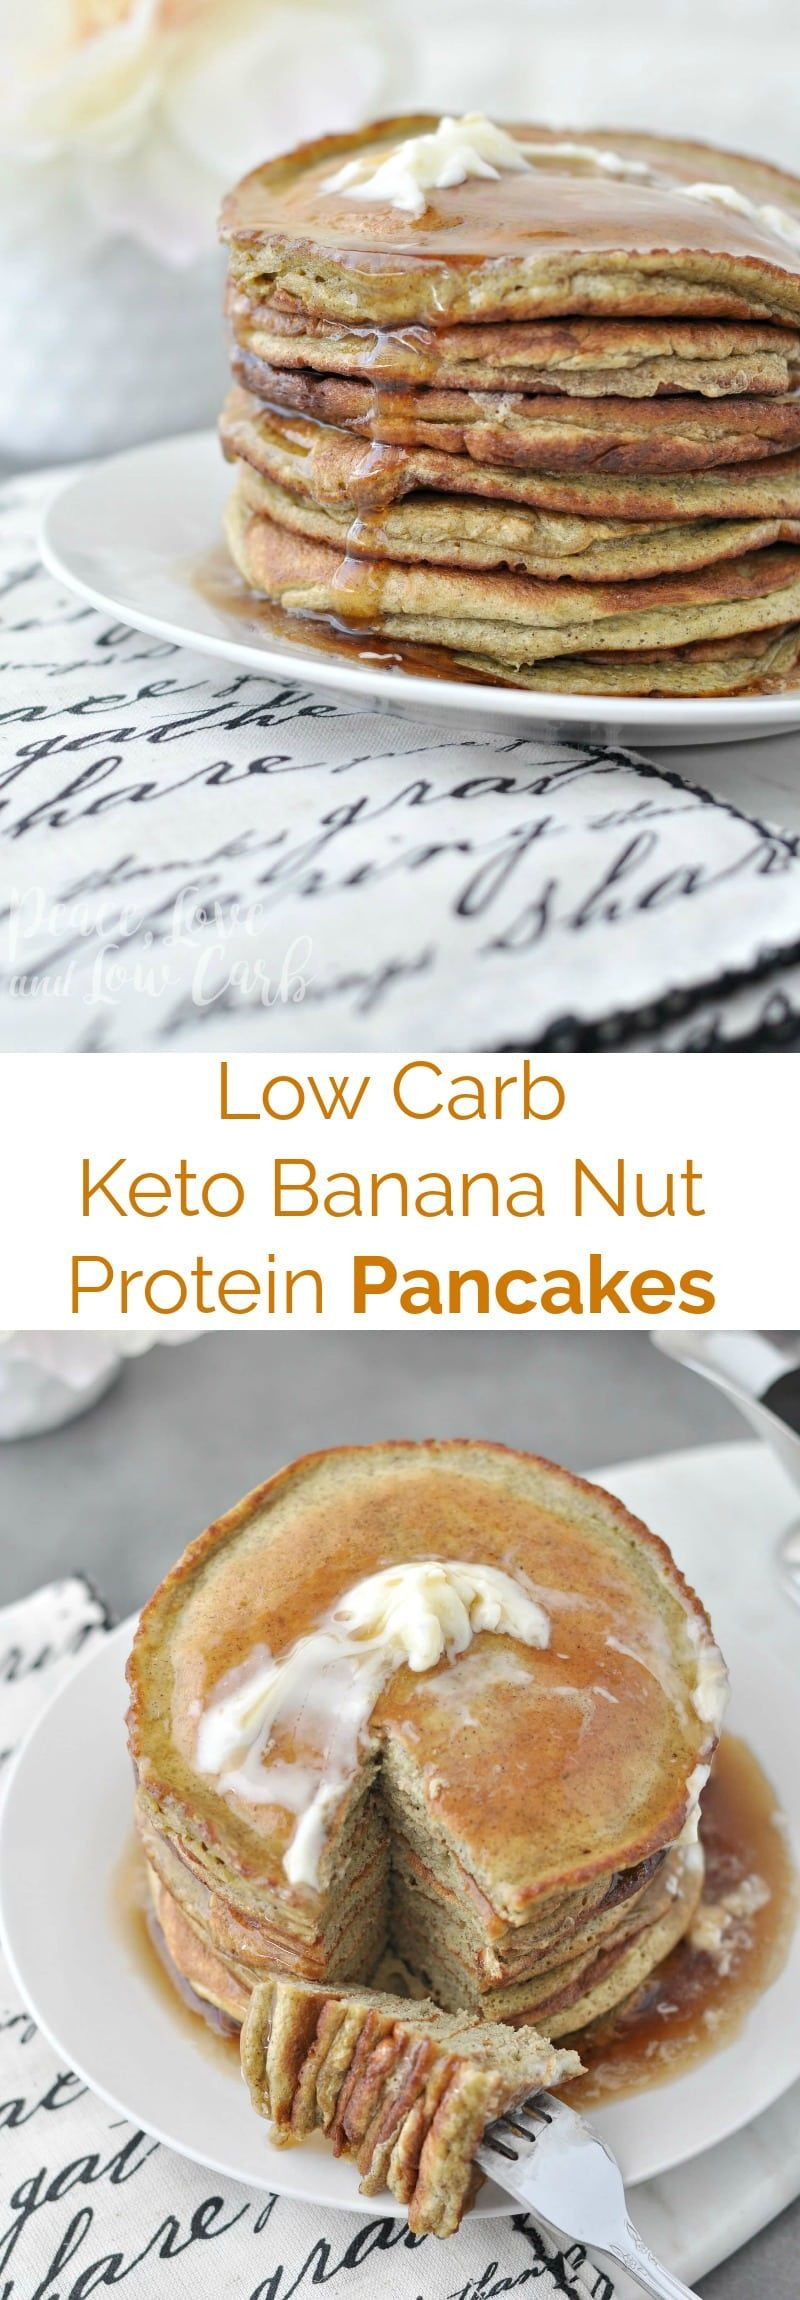 Vegan Protein Pancakes Low Carb
 Low Carb Keto Banana Nut Protein Pancakes